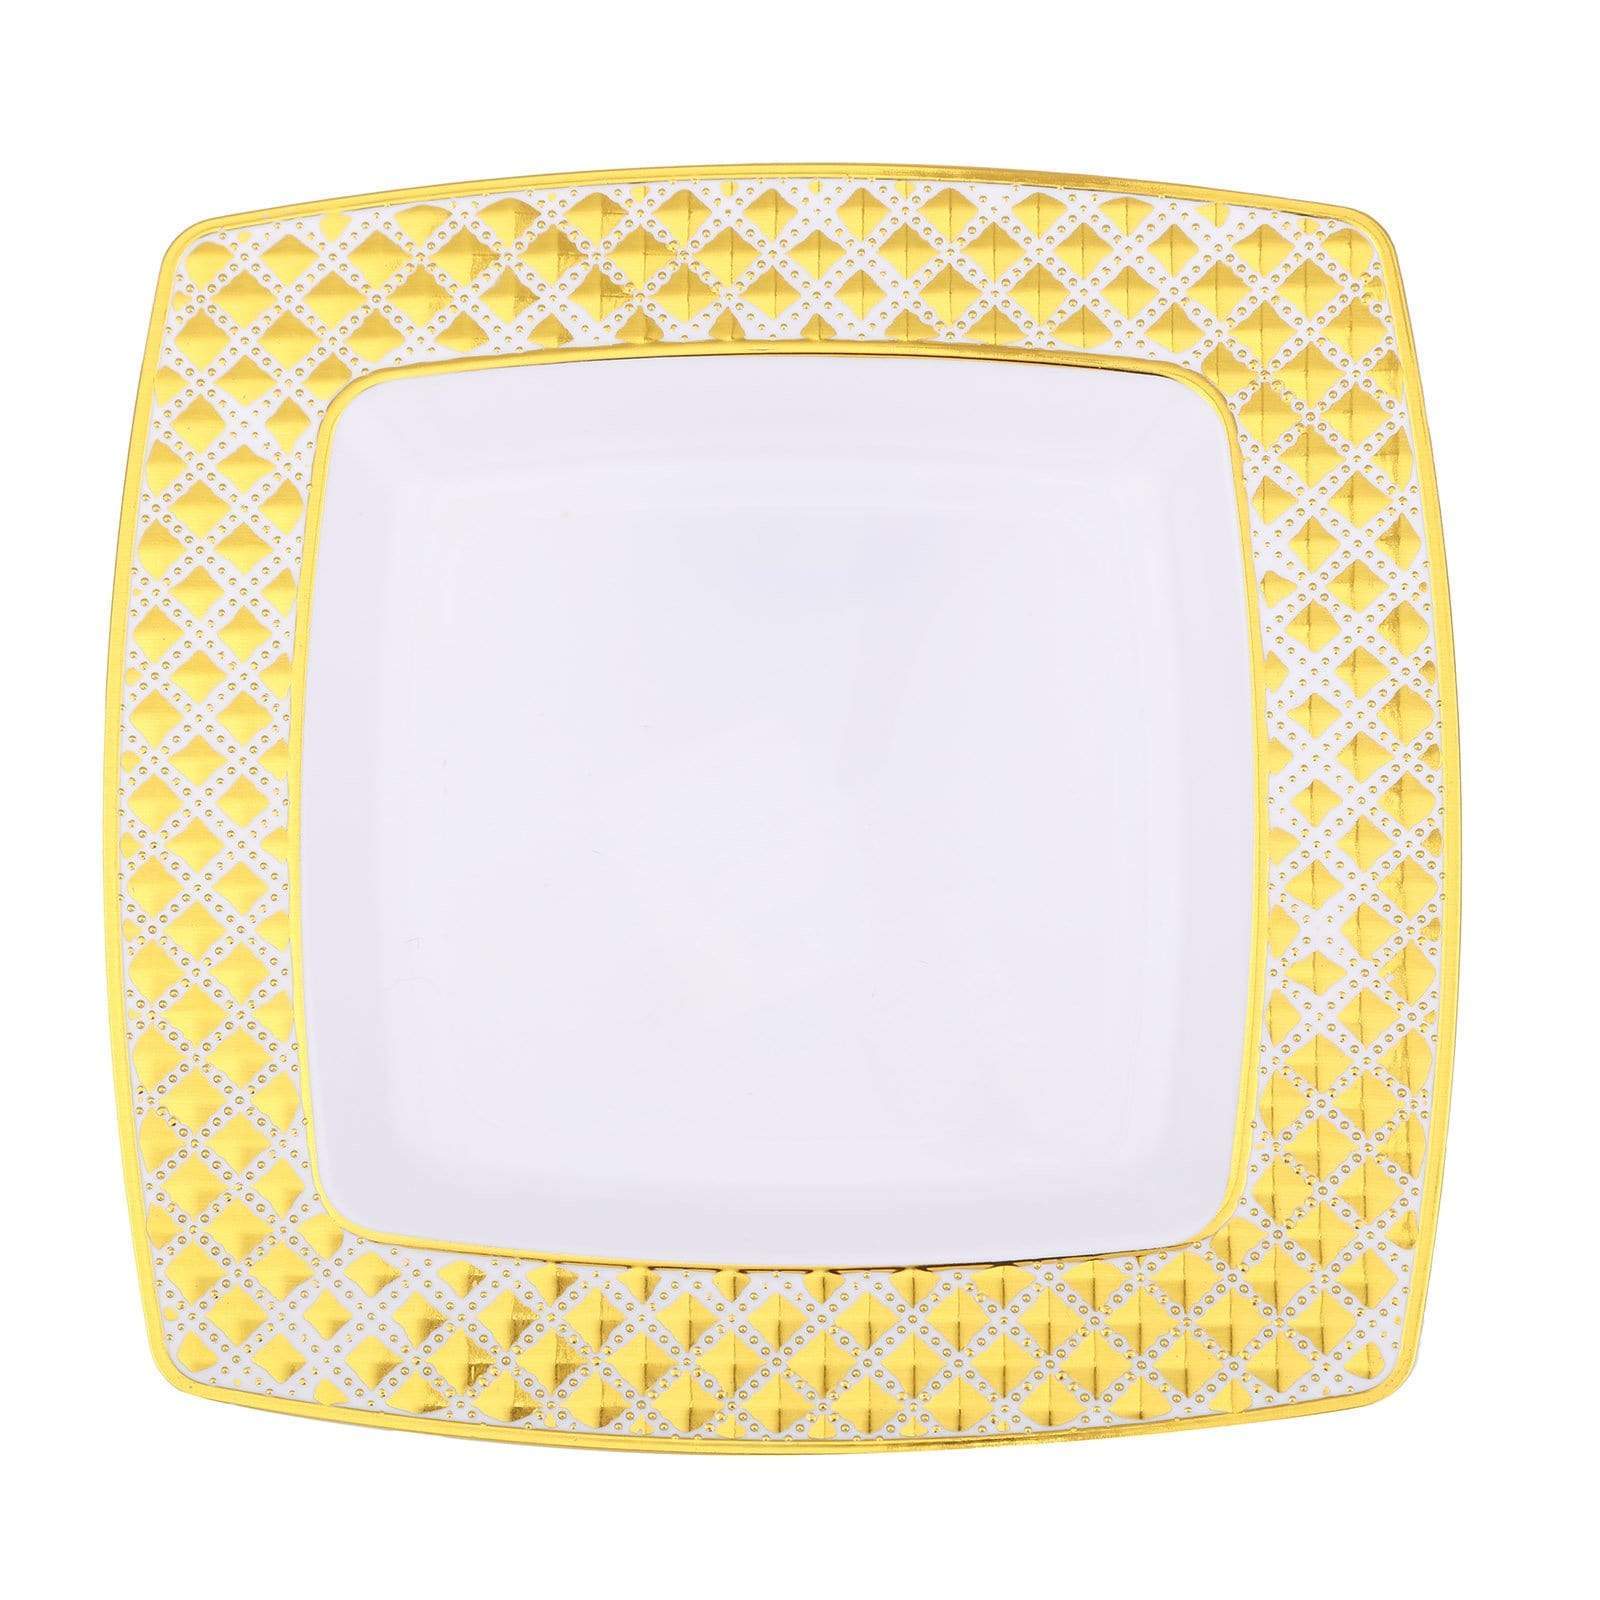 10 pcs Diamond Rim Square Plates Disposable Tableware DSP_PLS0001_7_GOLD